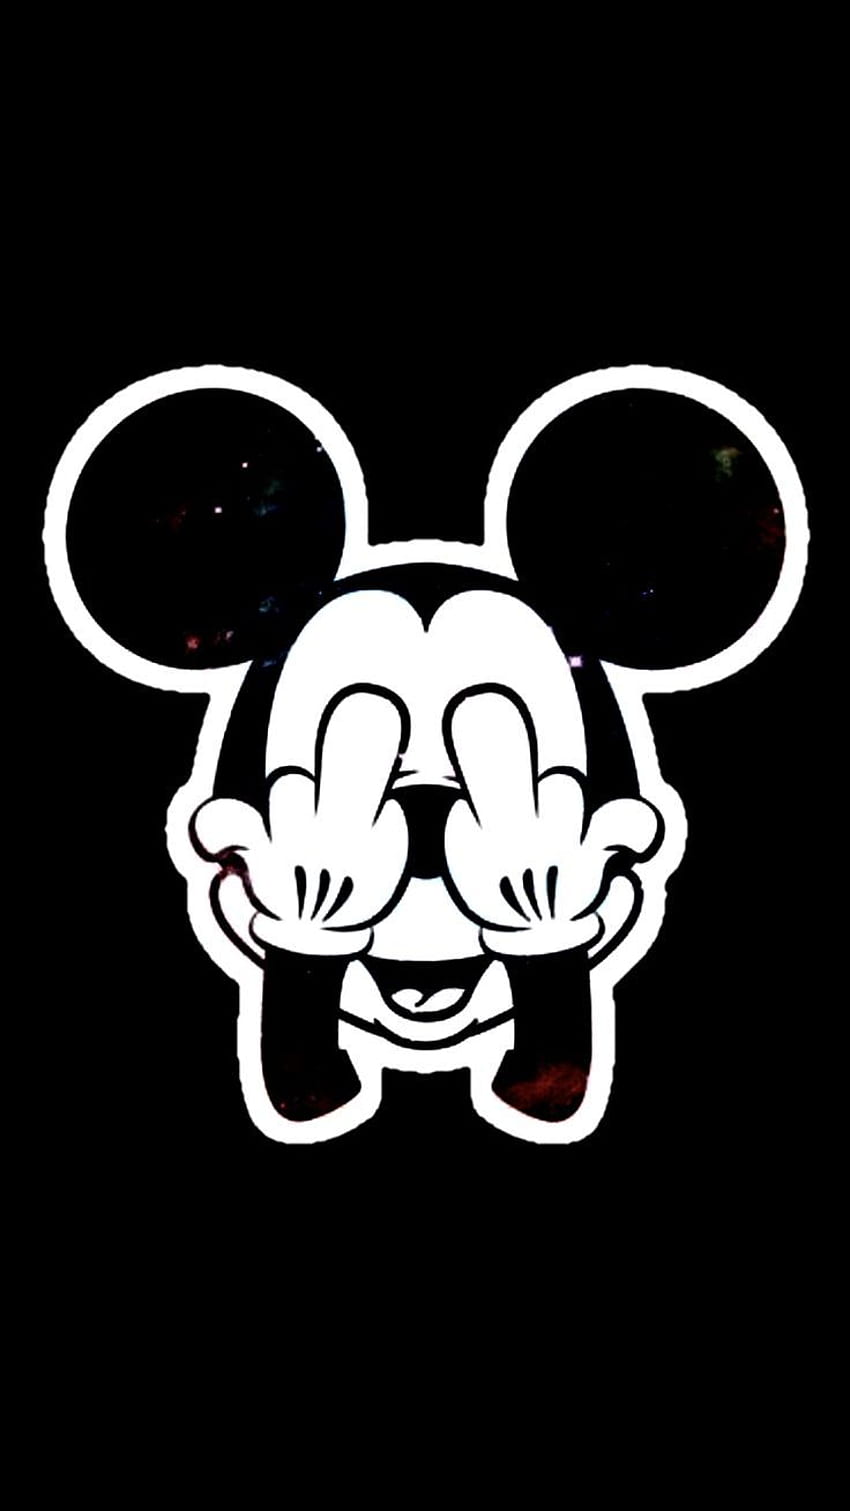 planodefundo. Mickey Mouse Kunst, IPhone Hintergrund Disney, Disney Bildschirmhintergrund, Mickey Mouse Swag fondo de pantalla del teléfono